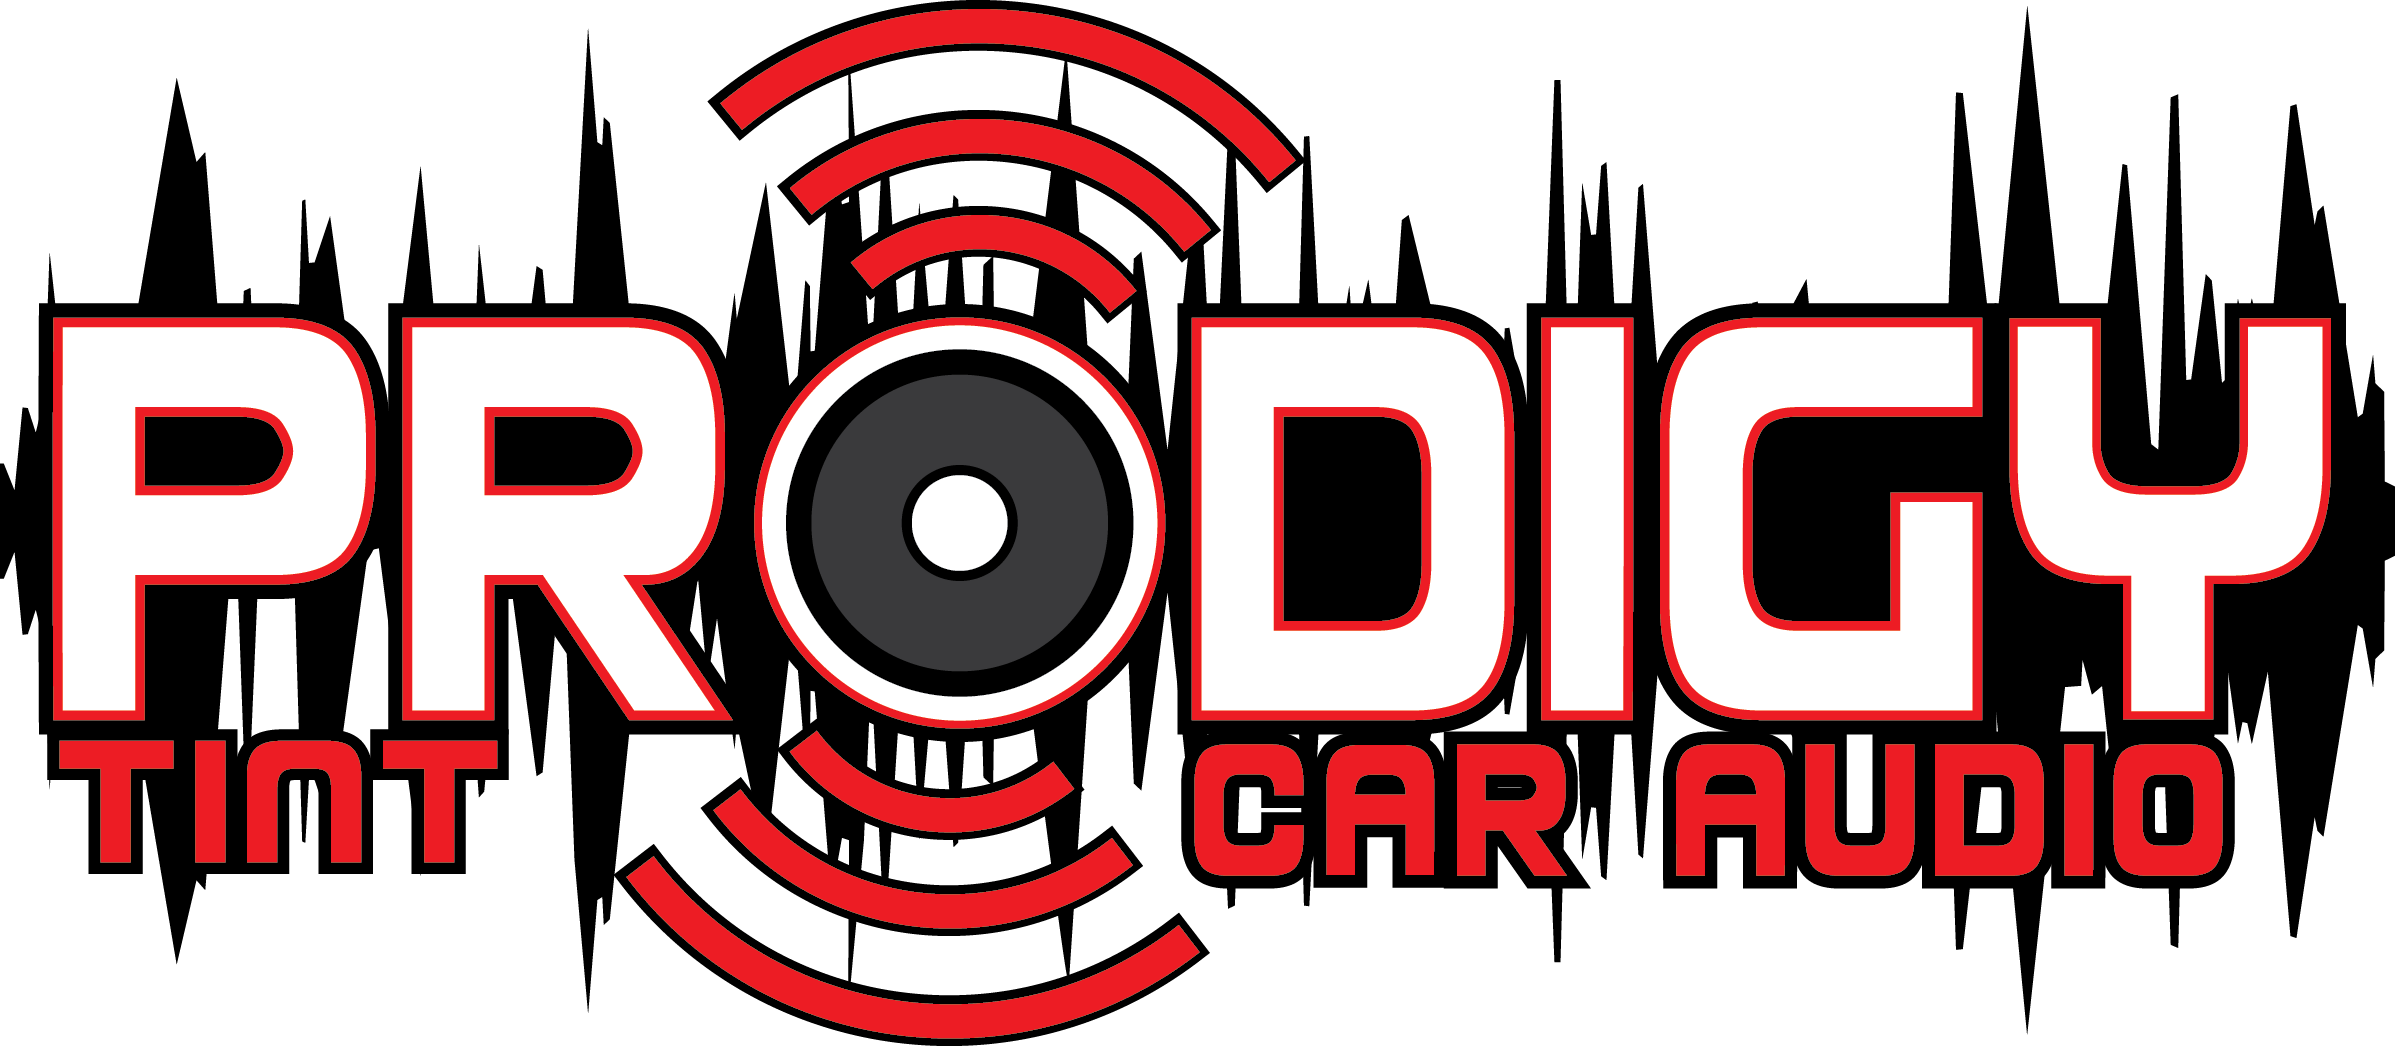 Prodigy Car Audio - Logos Tuning Car Audio (2395x1046), Png Download